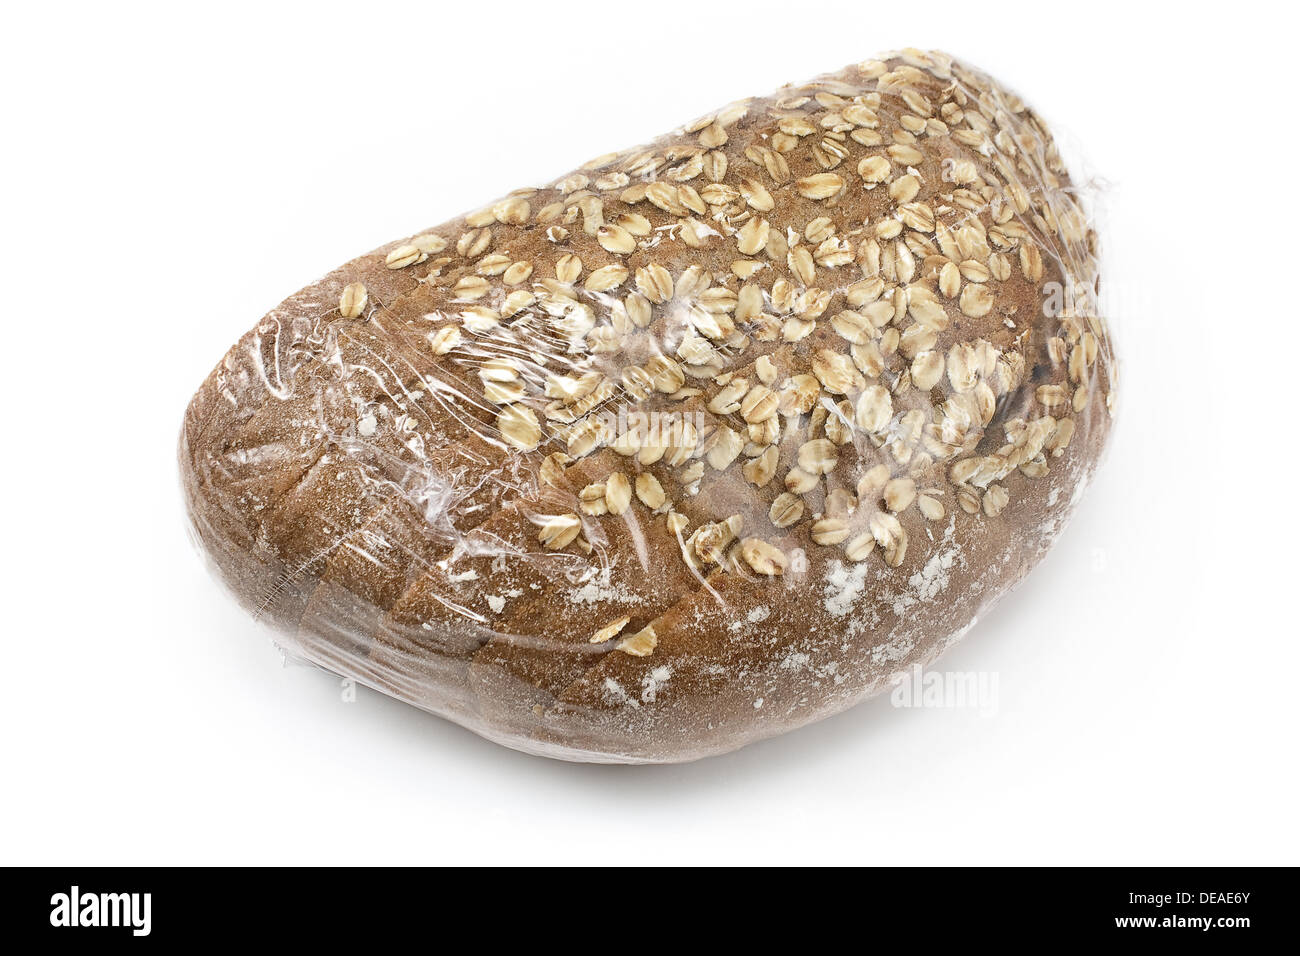 Gebackenes Brot mit Samen verpackt in Cellophan, isoliert auf weiss Stockfoto